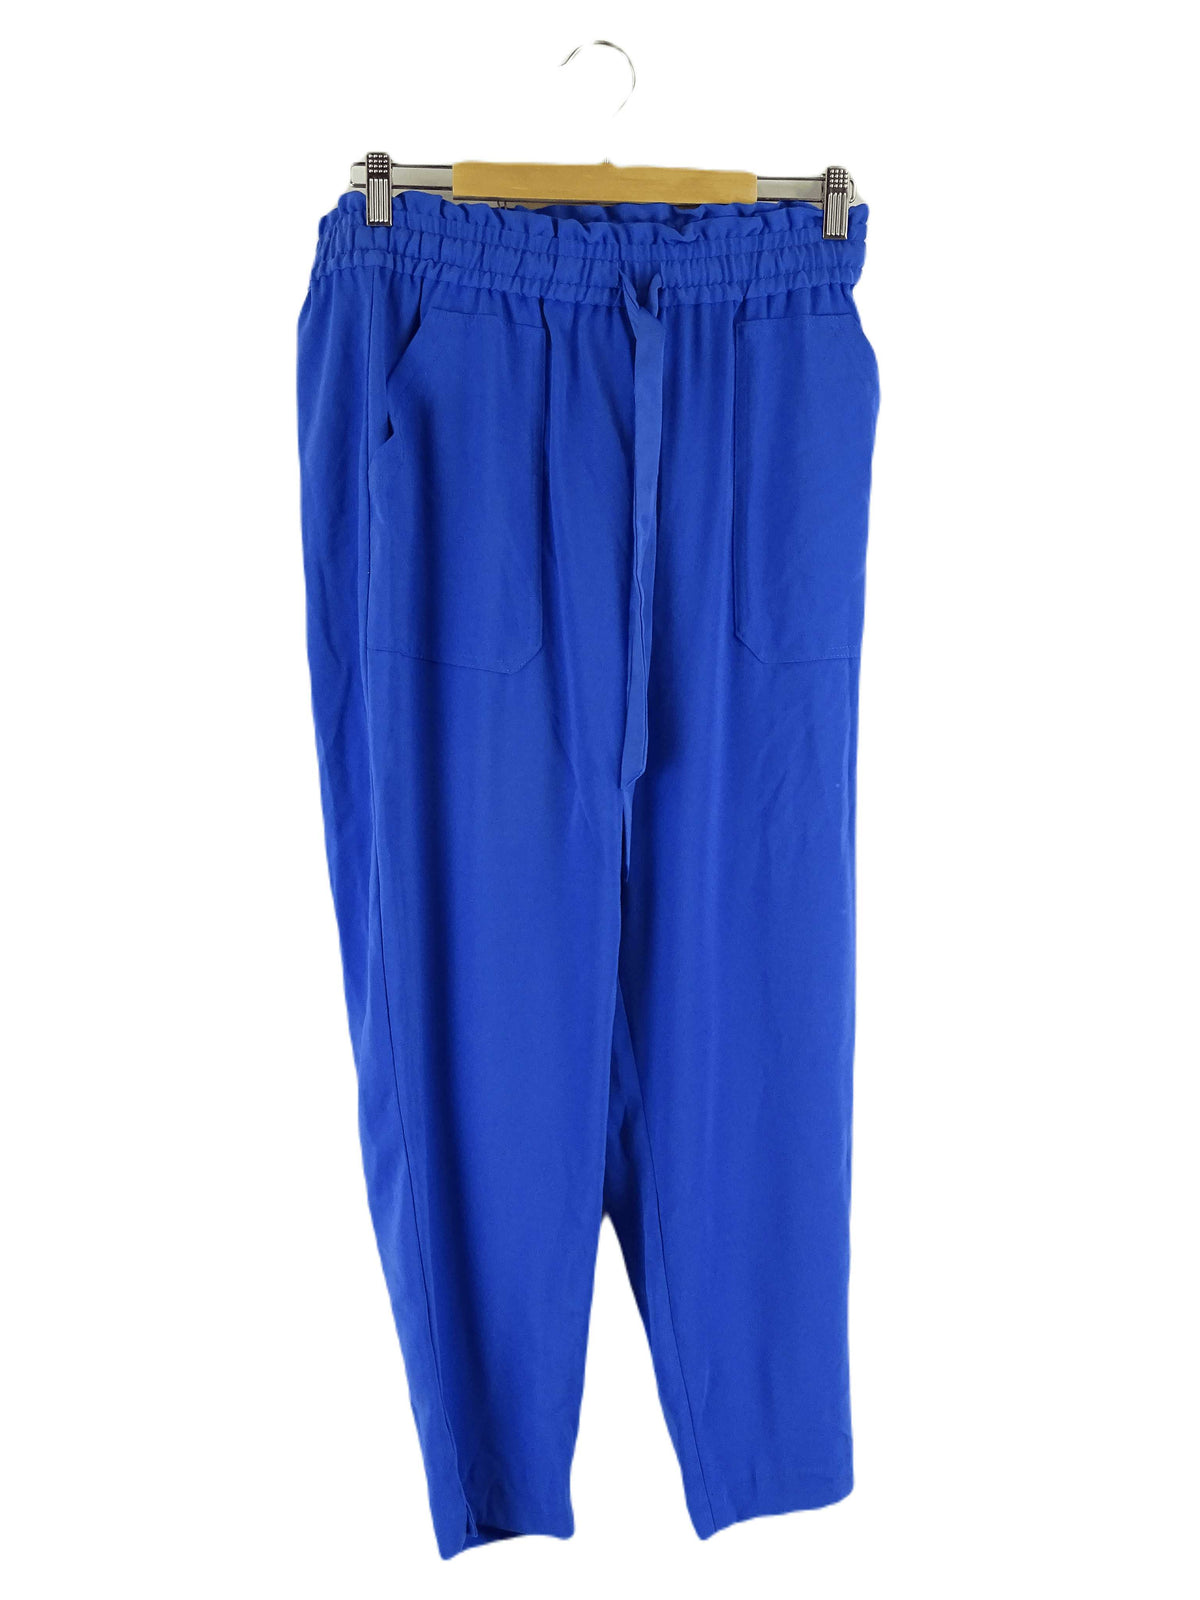 Zara Blue Pants 12